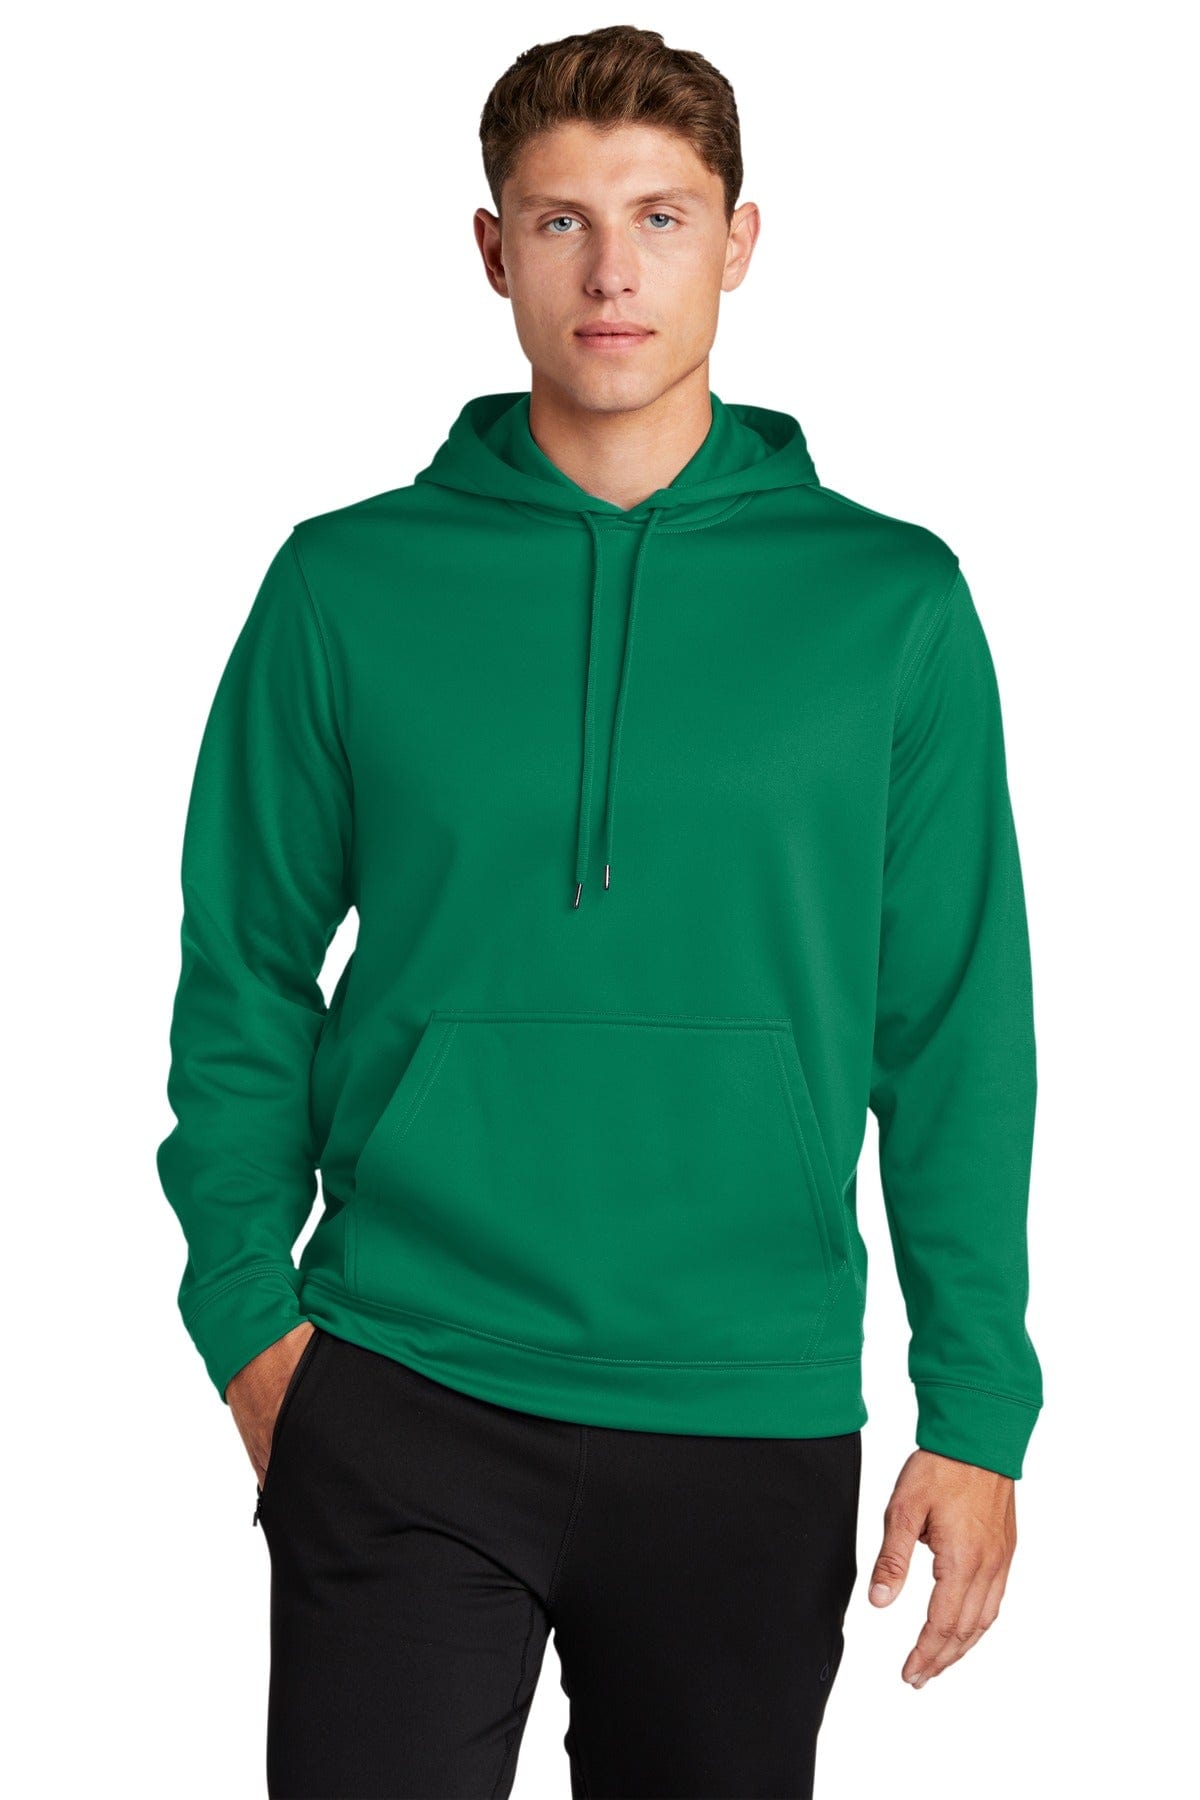 Sport-Tek ® Sport-Wick ® Fleece Hooded Pullover. F244, Basic Colors